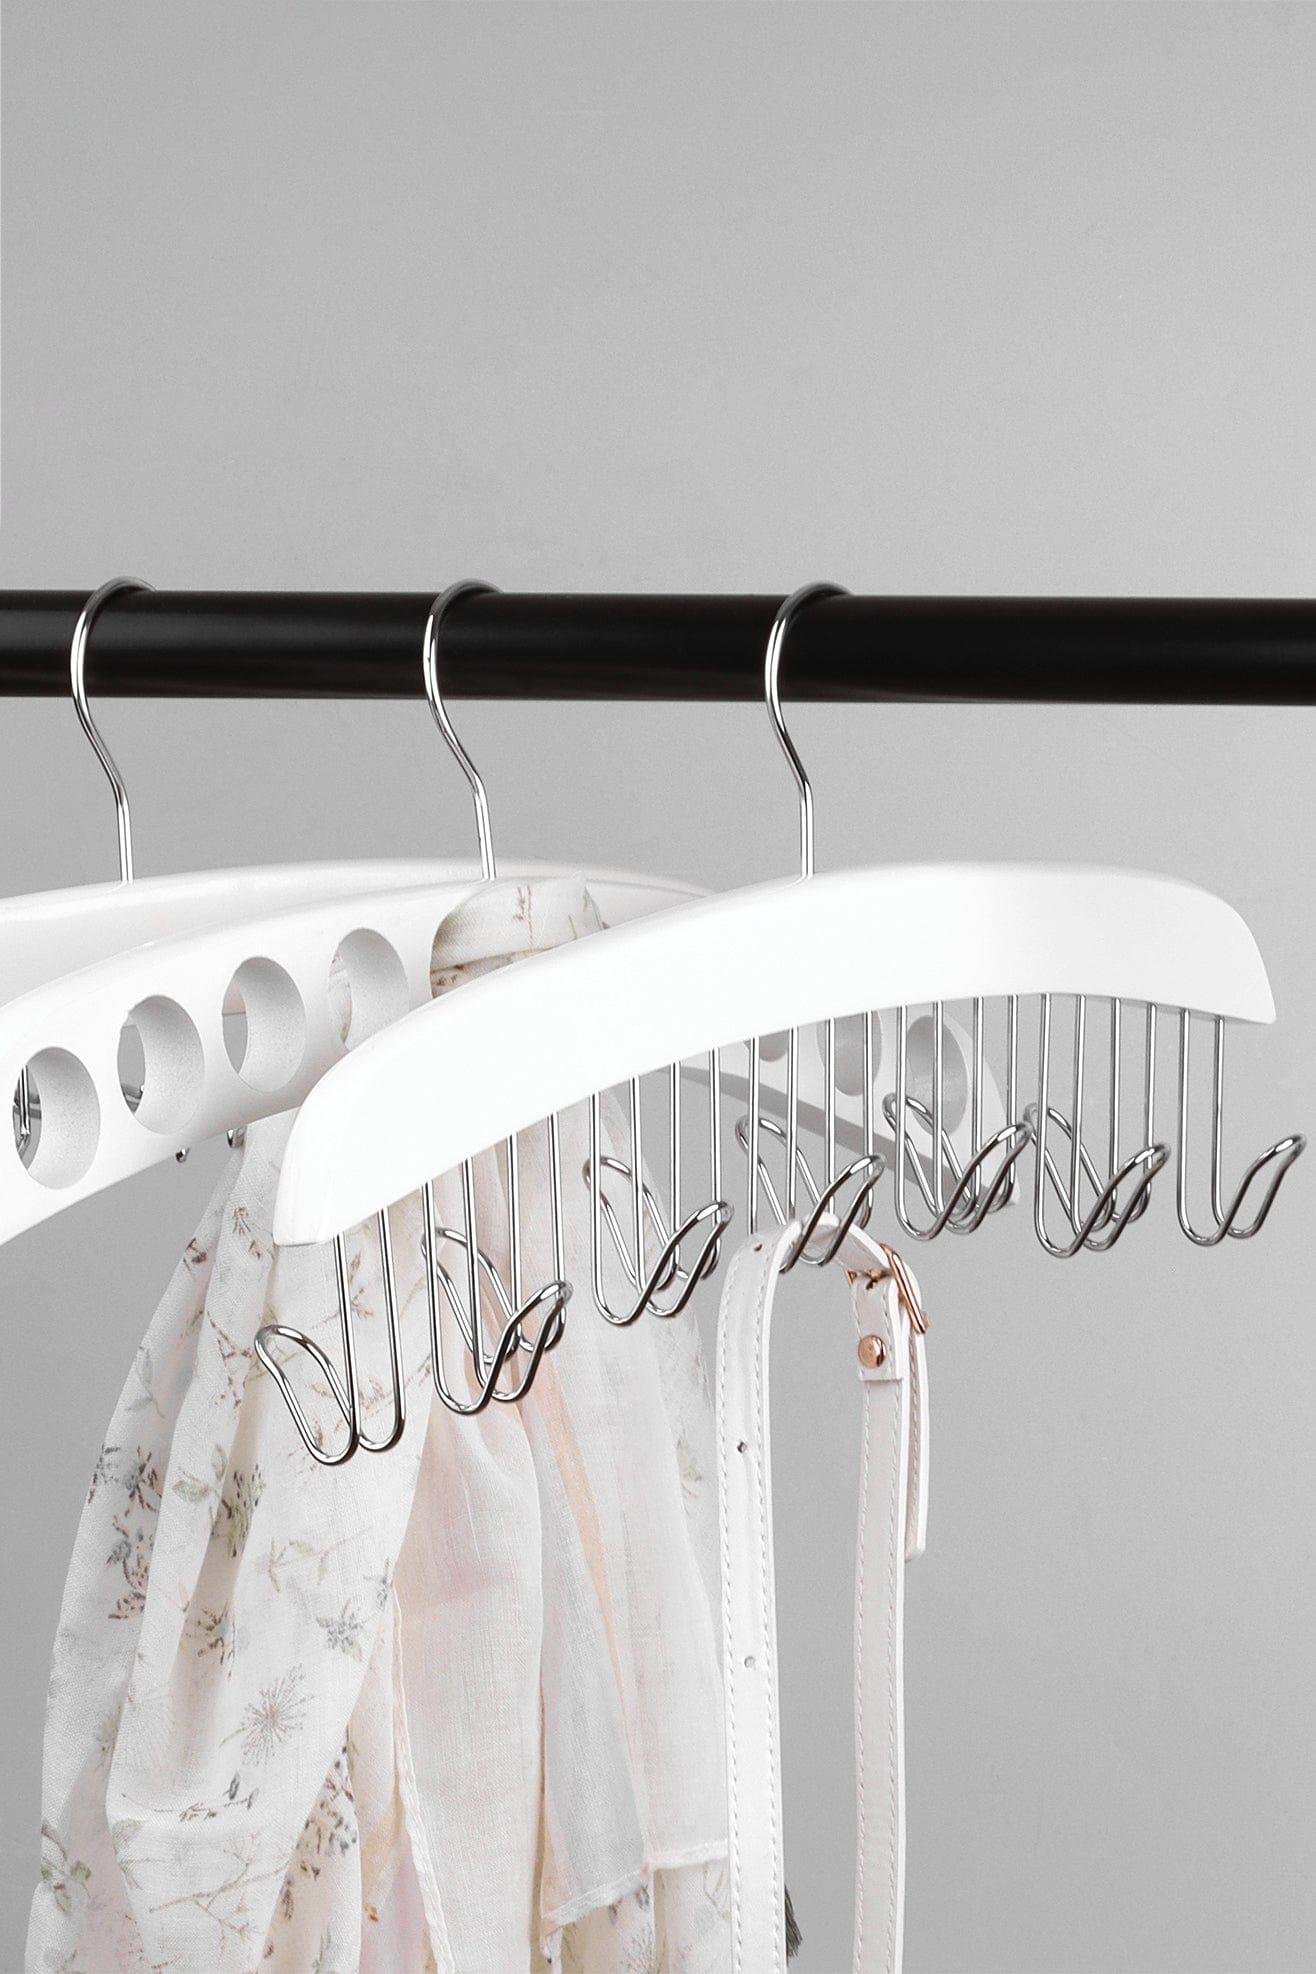 G Decor Hangers White Set of 3 White Wooden Multi-Purpose Clothes Hangers